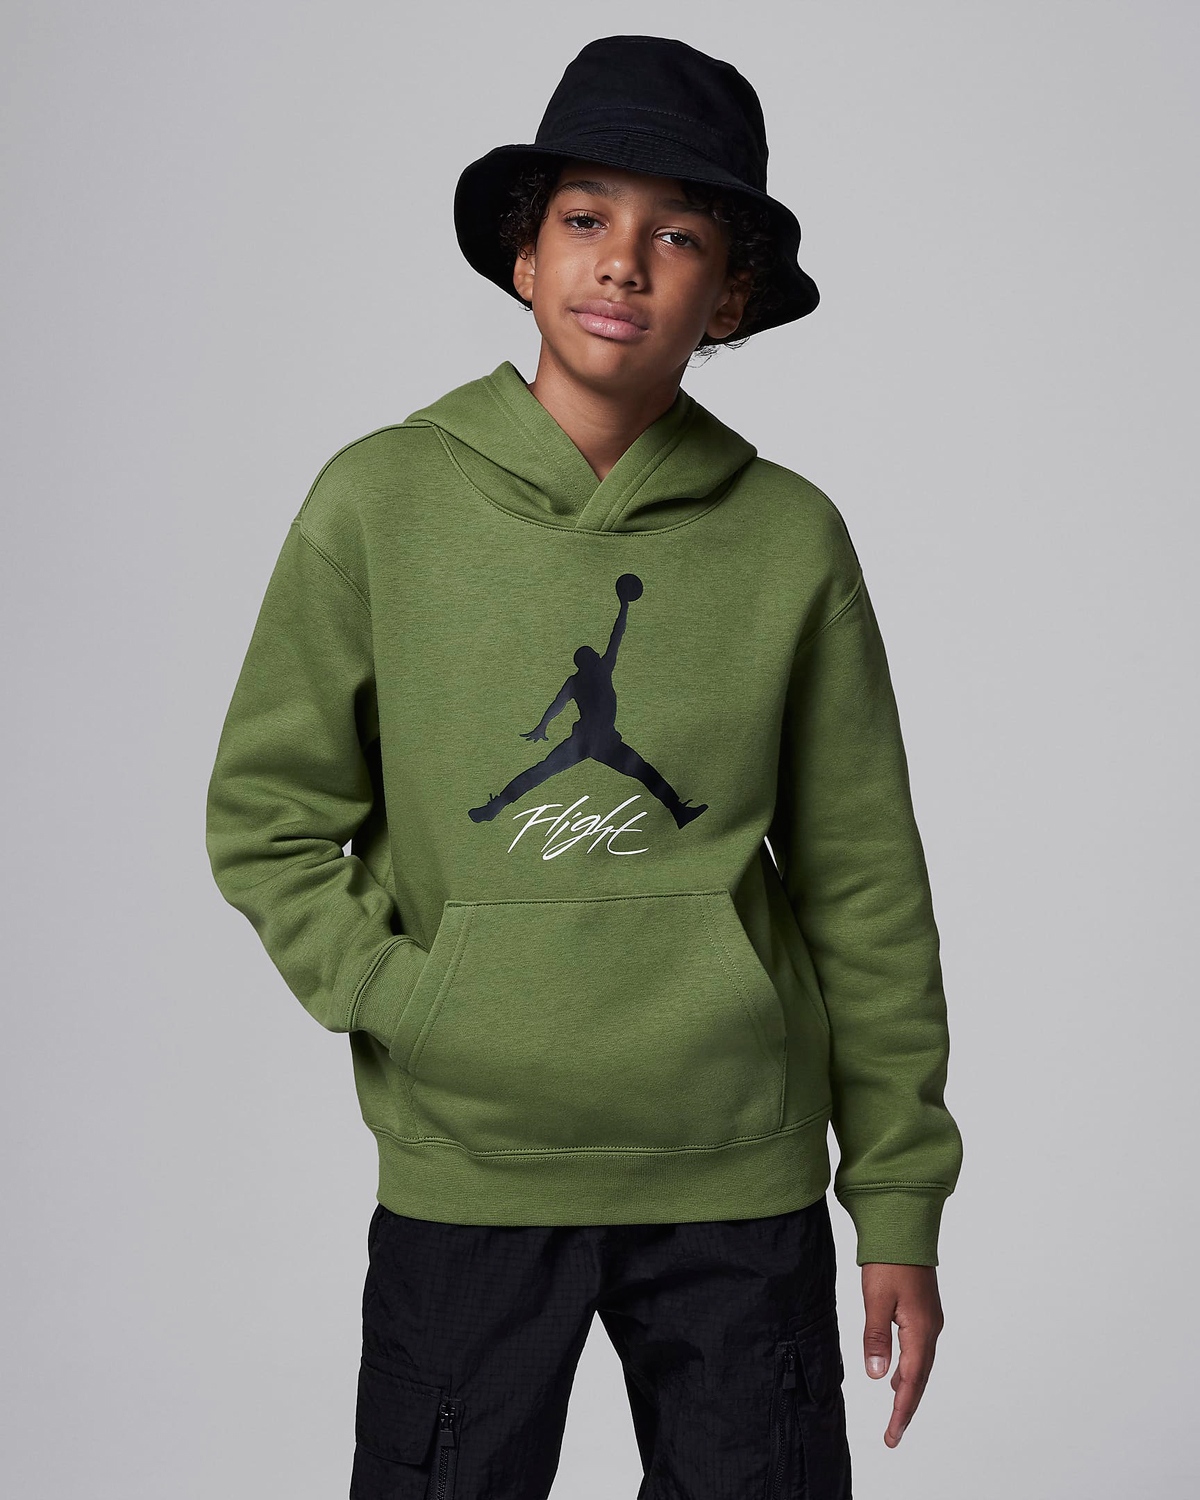 Air Jordan 4 Craft Olive Kids Grade School Shirts Outfits